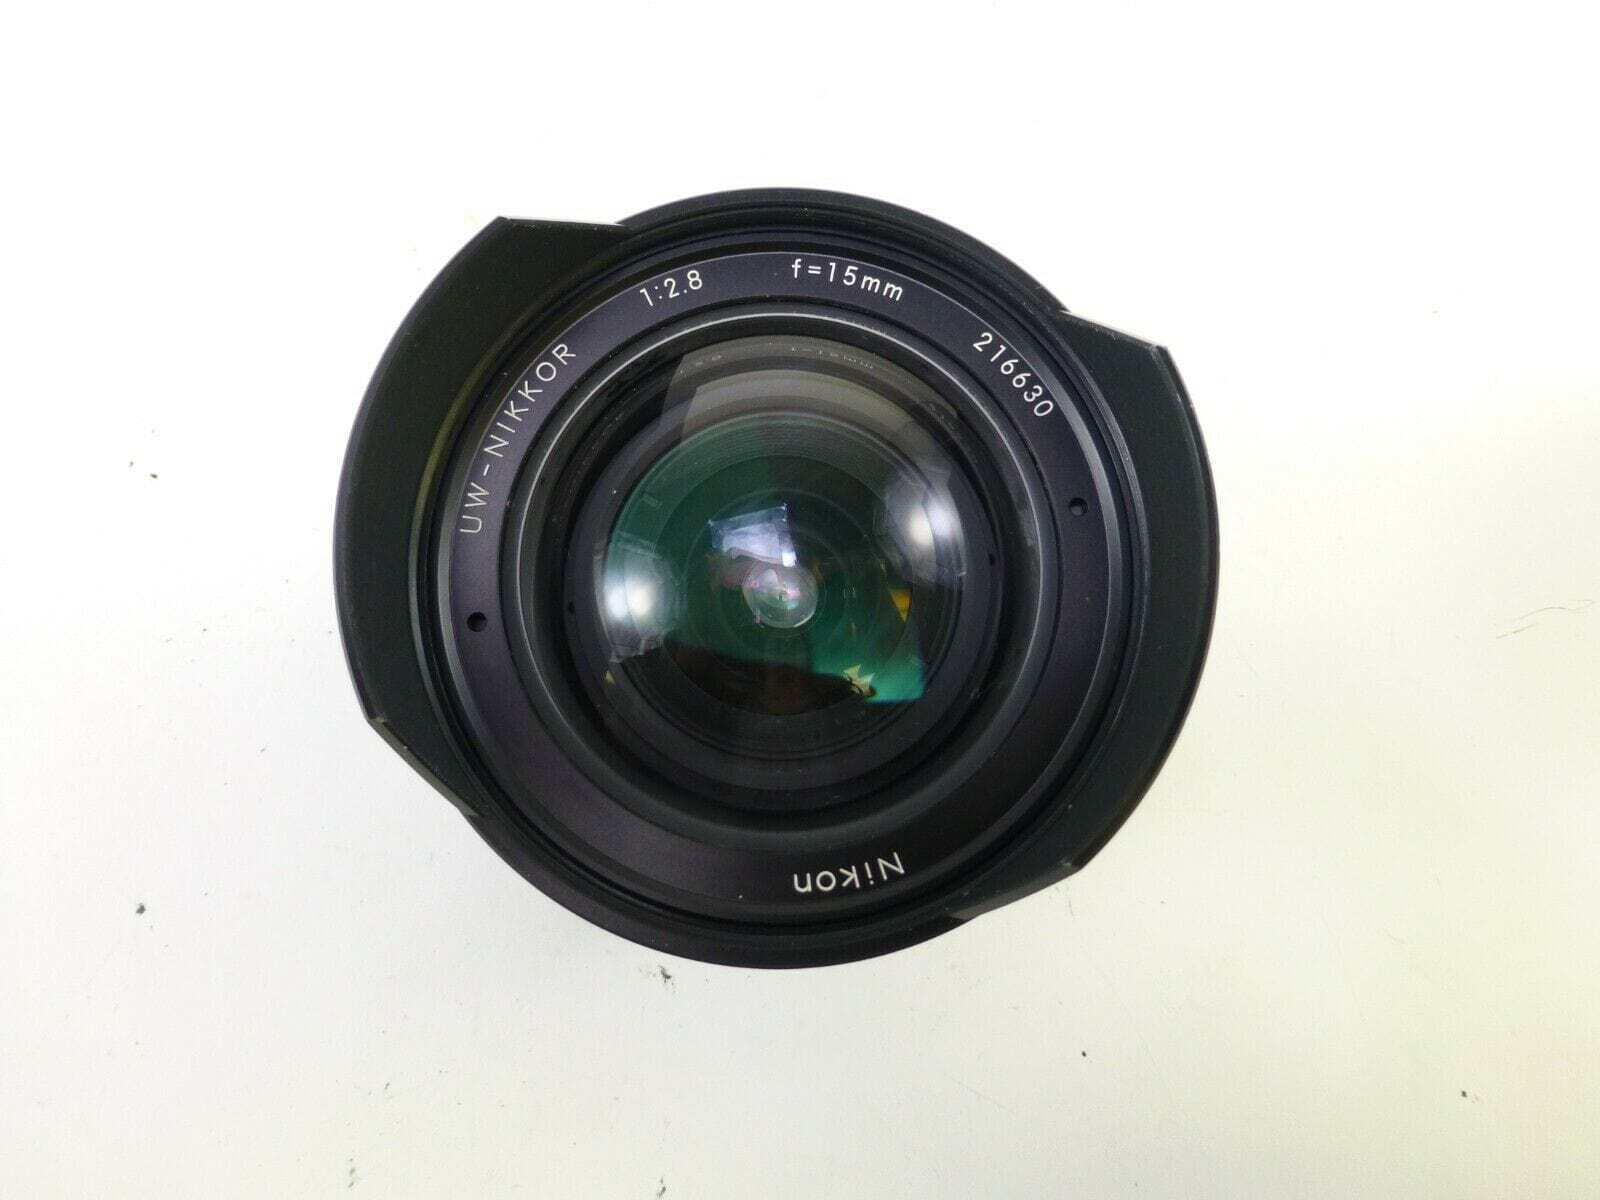 Nikon UW-Nikkor 15mm F/2.8 Lens with Nikonos 15 Viewfinder